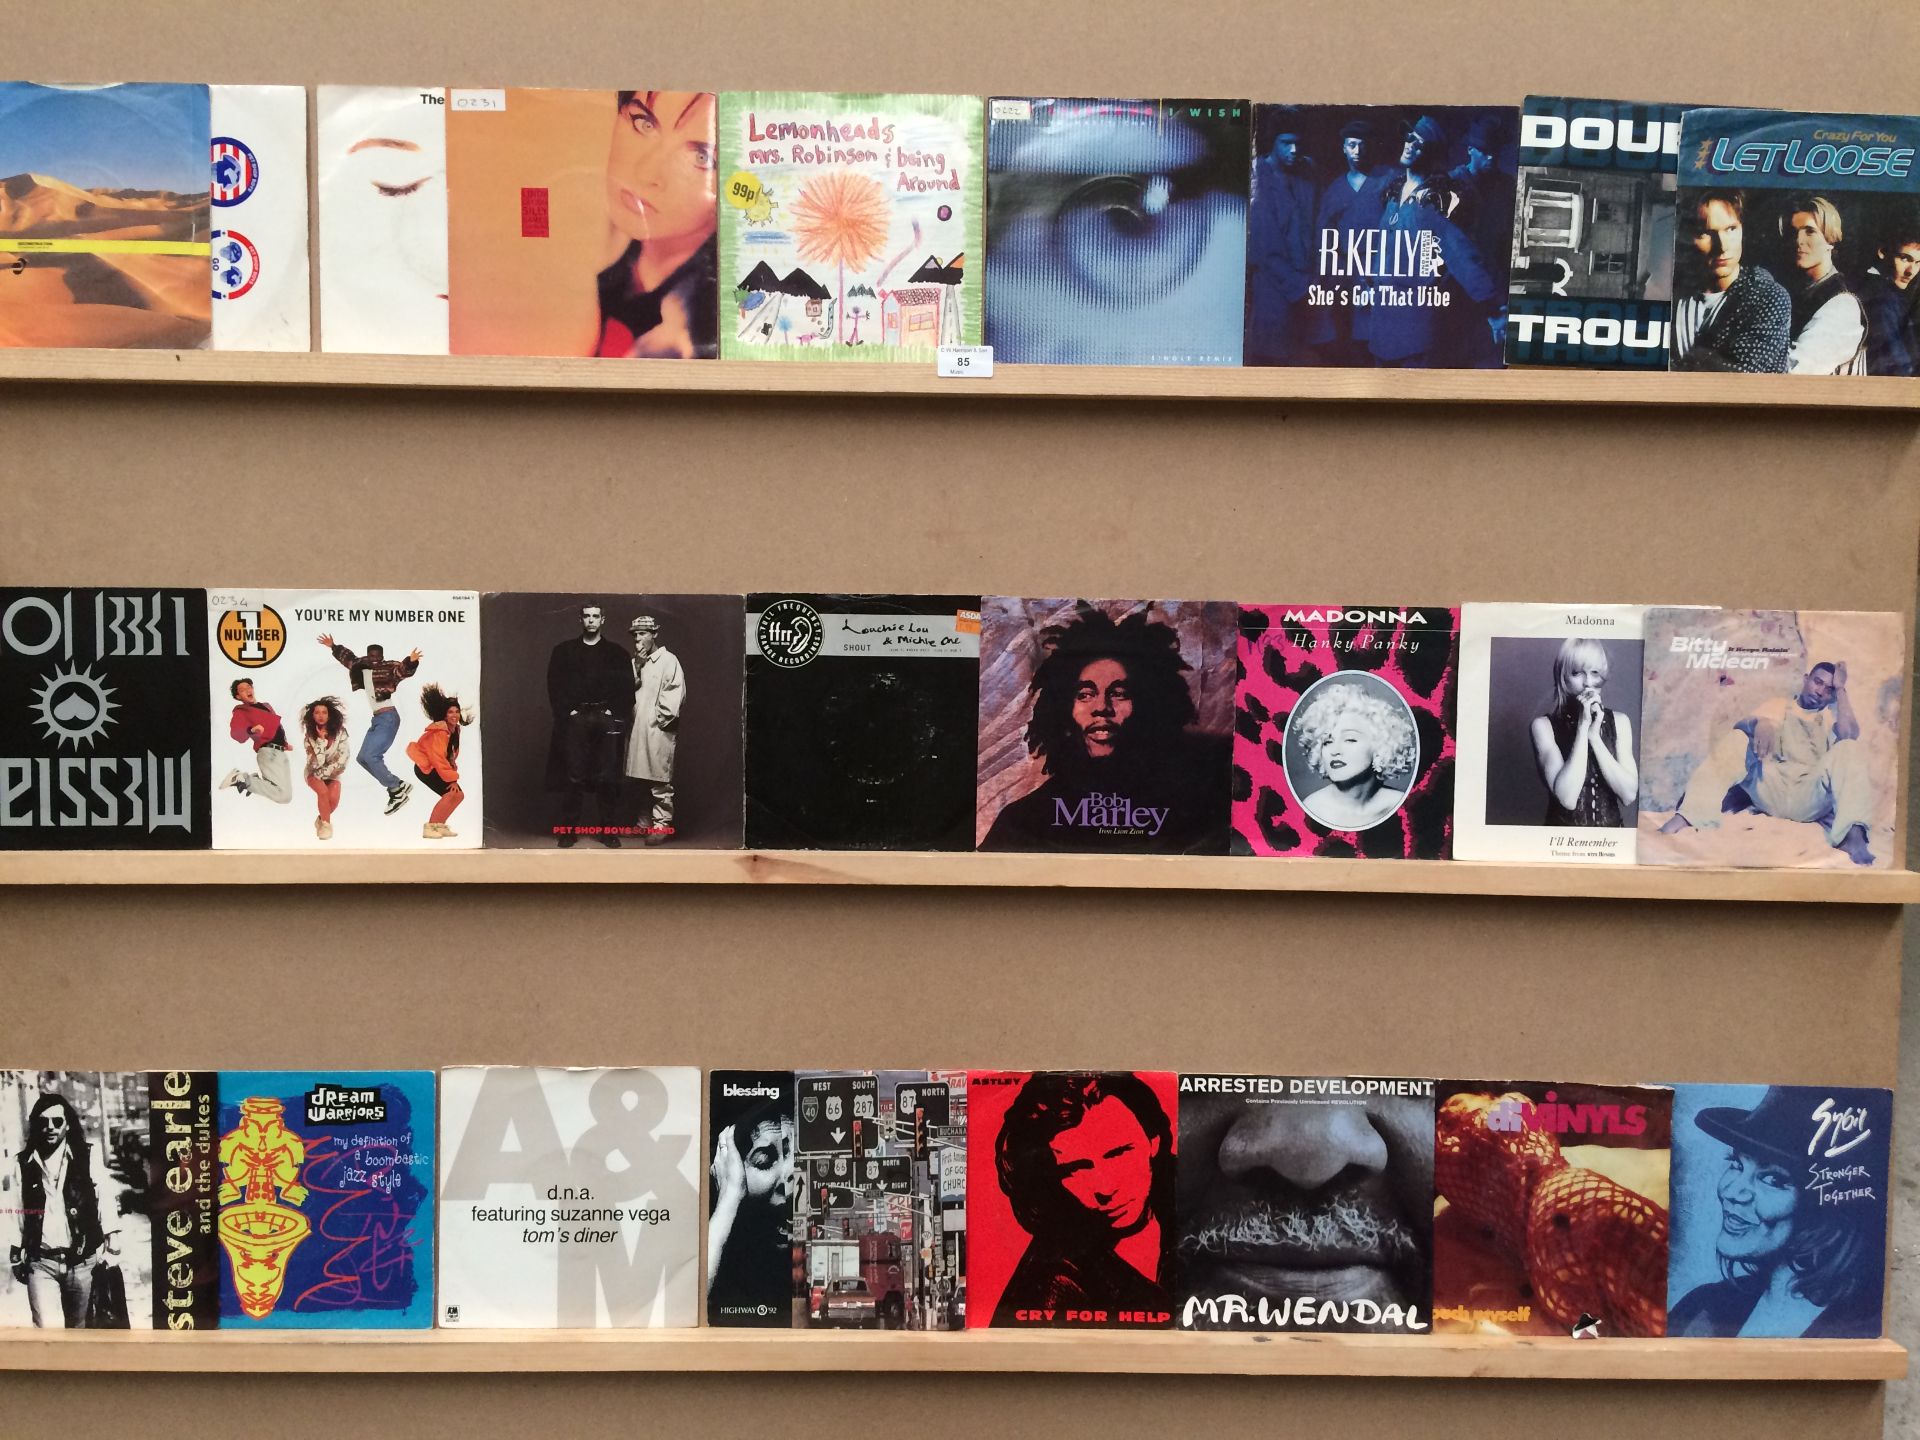 185 x assorted 7" vinyl records mainly 80s/90s - Lemonheads, Bob Marley, Madonna,